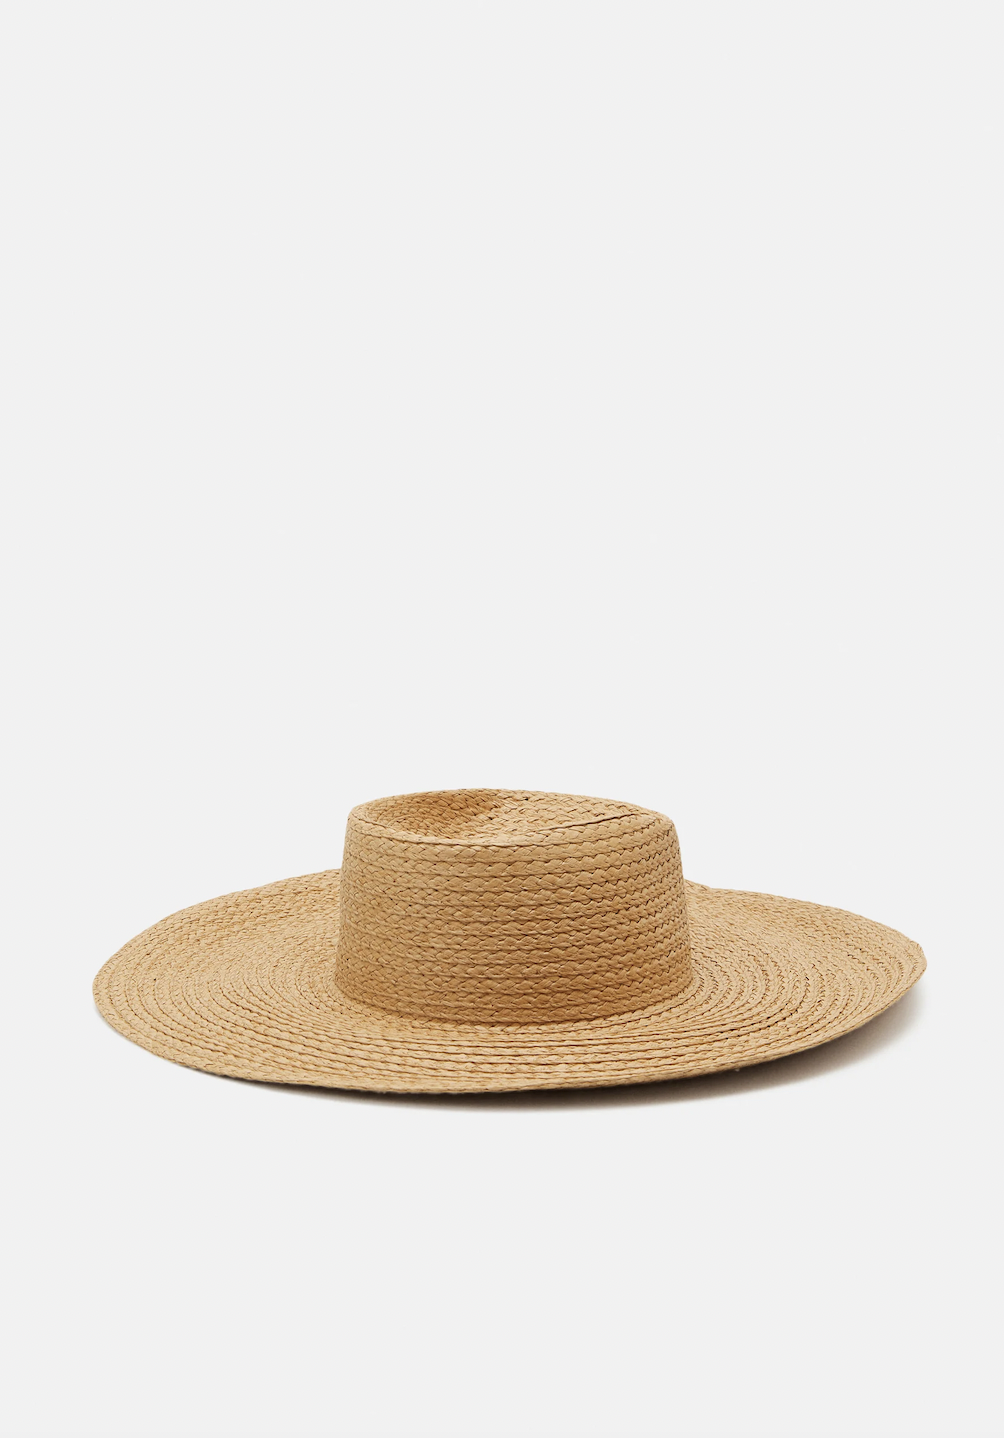 sombrero de Zign 14,99 euros